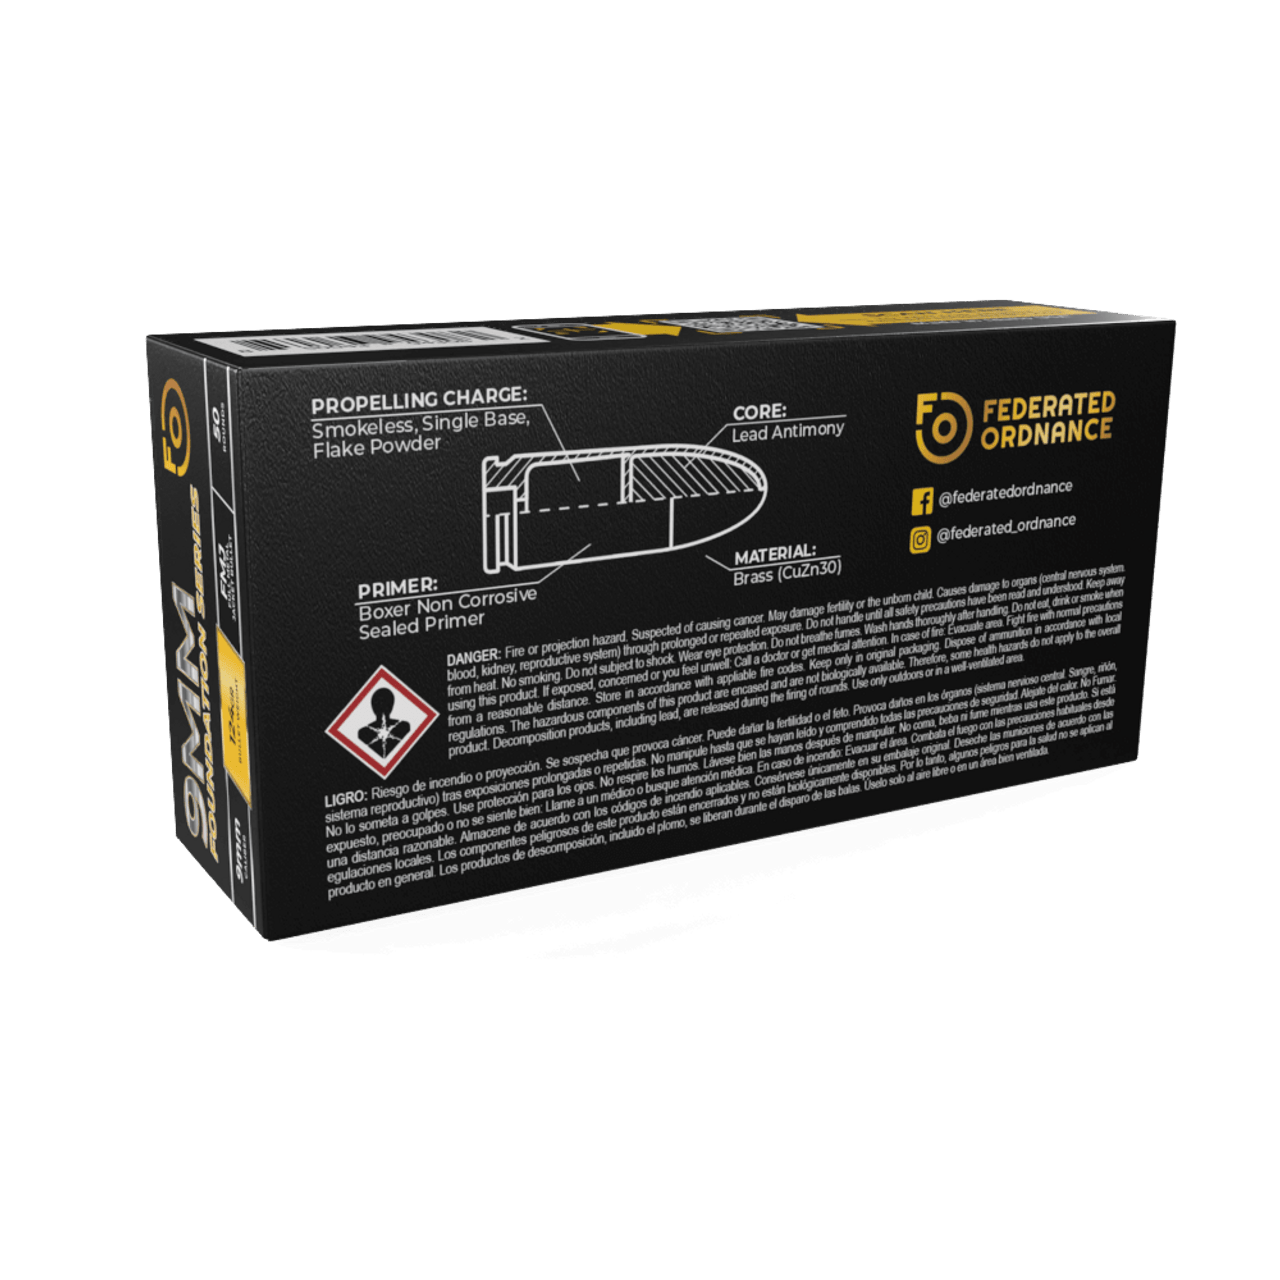 Federated Ordnance 124gr Box | Stockpile Defense